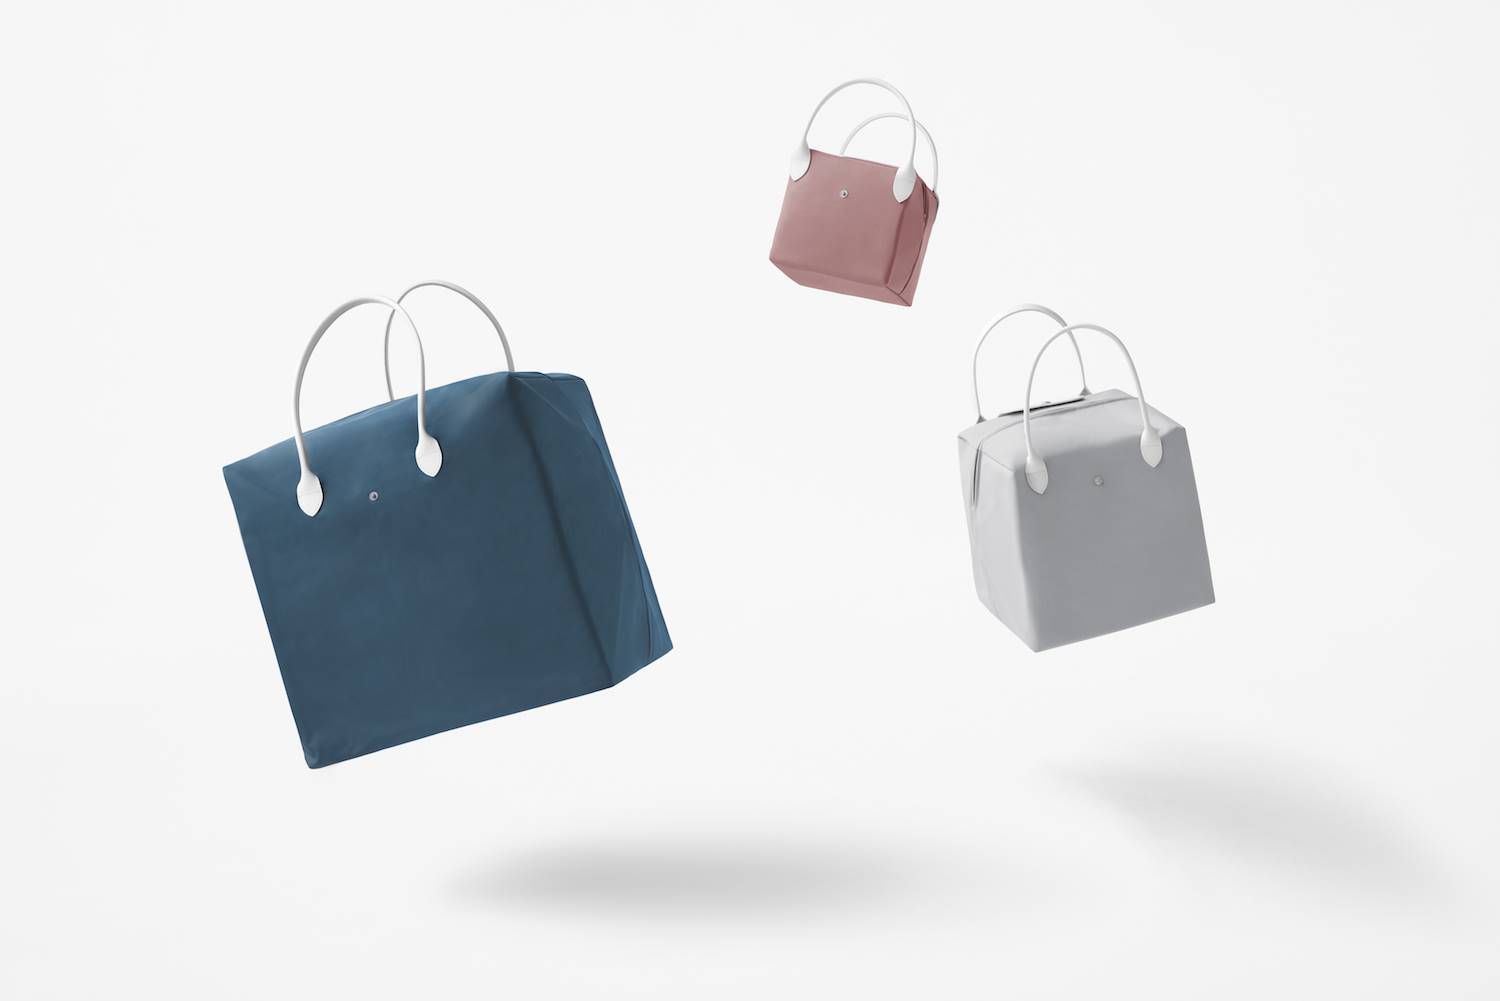 Bolso Katachi diseñado por Nendo para Longchamp 4. La colección Katachi puede adquirirse en seis colores diferentes. 